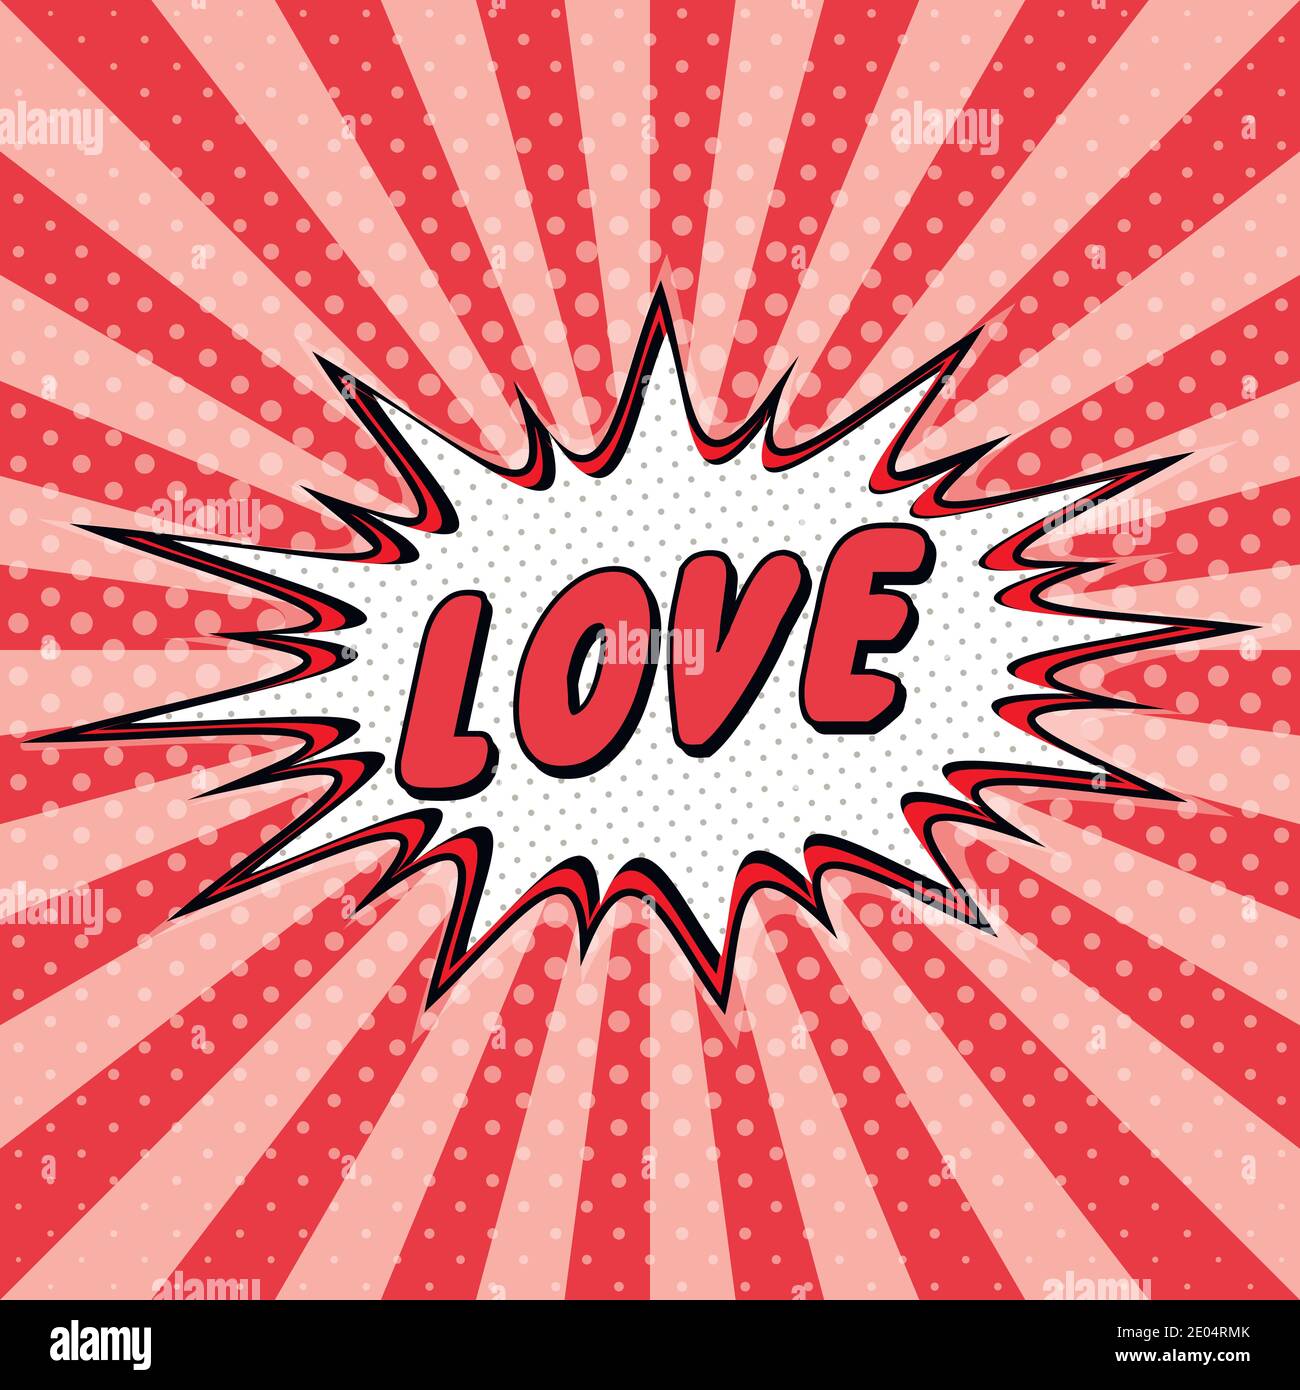 https://c8.alamy.com/comp/2E04RMK/declaration-of-love-pop-art-comic-speech-bubble-halftone-love-cartoon-explosion-loving-you-vector-2E04RMK.jpg